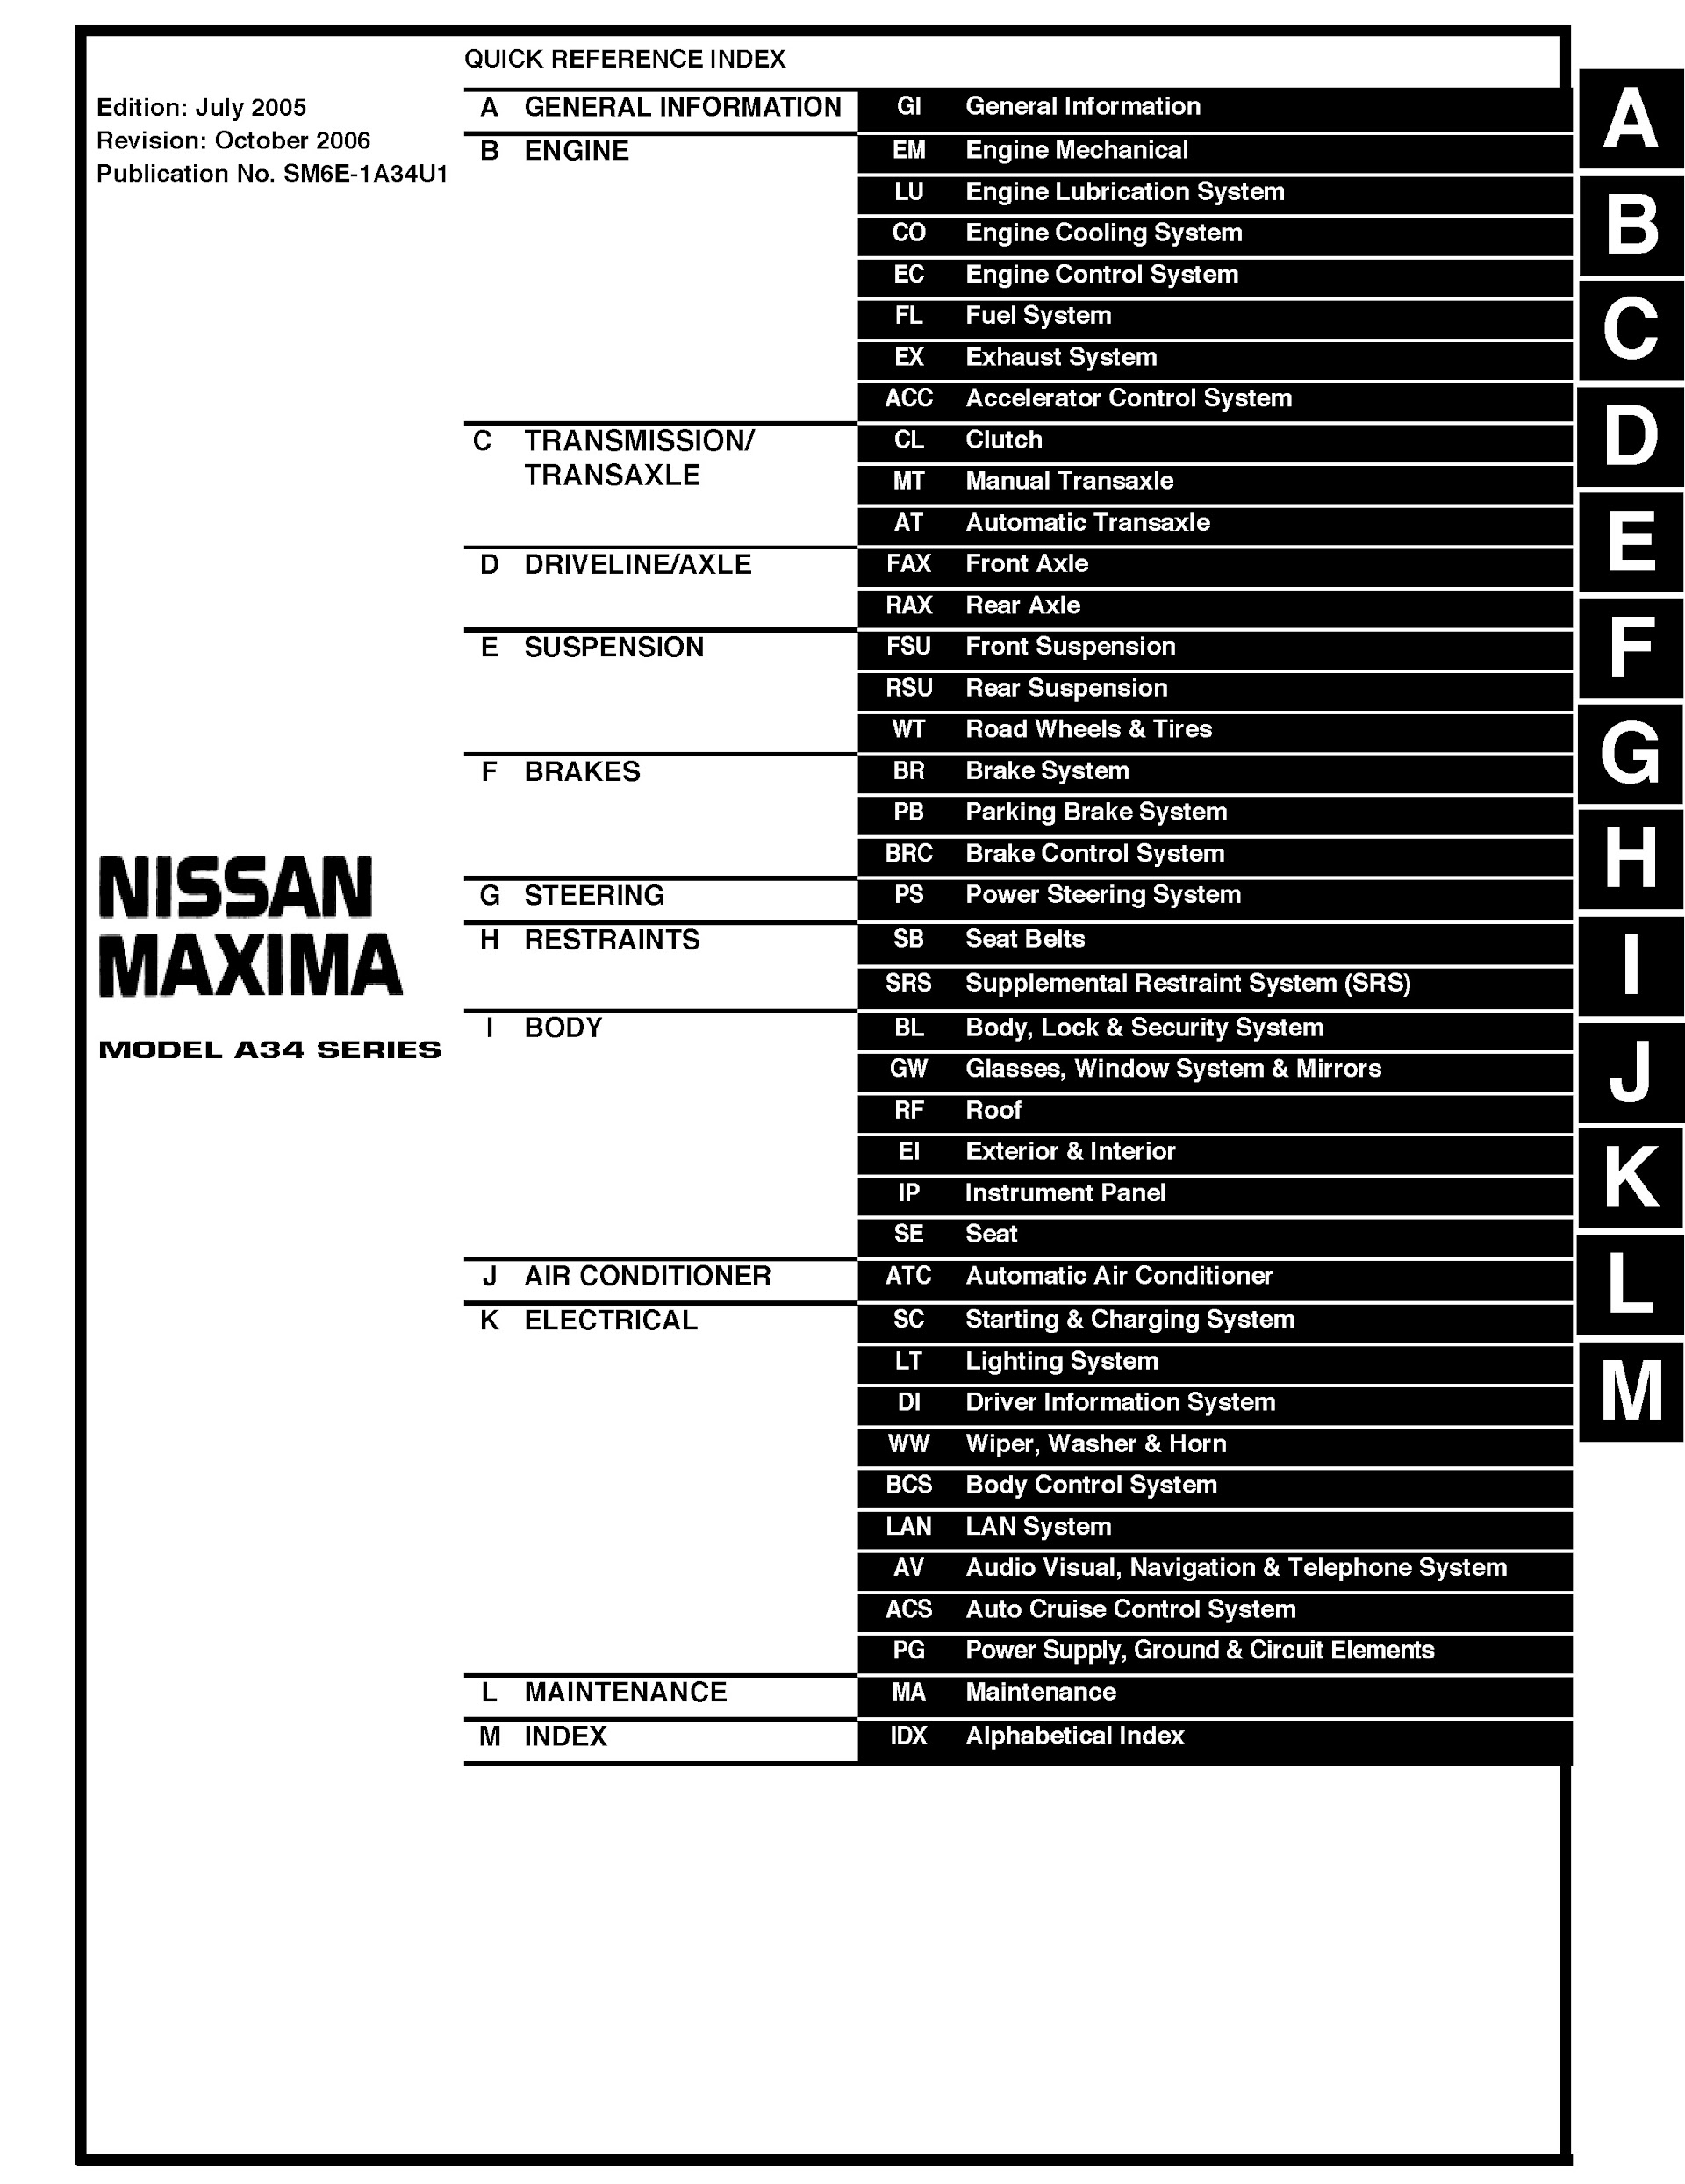 table of contents 2006 Nissan Maxima Repair Manual